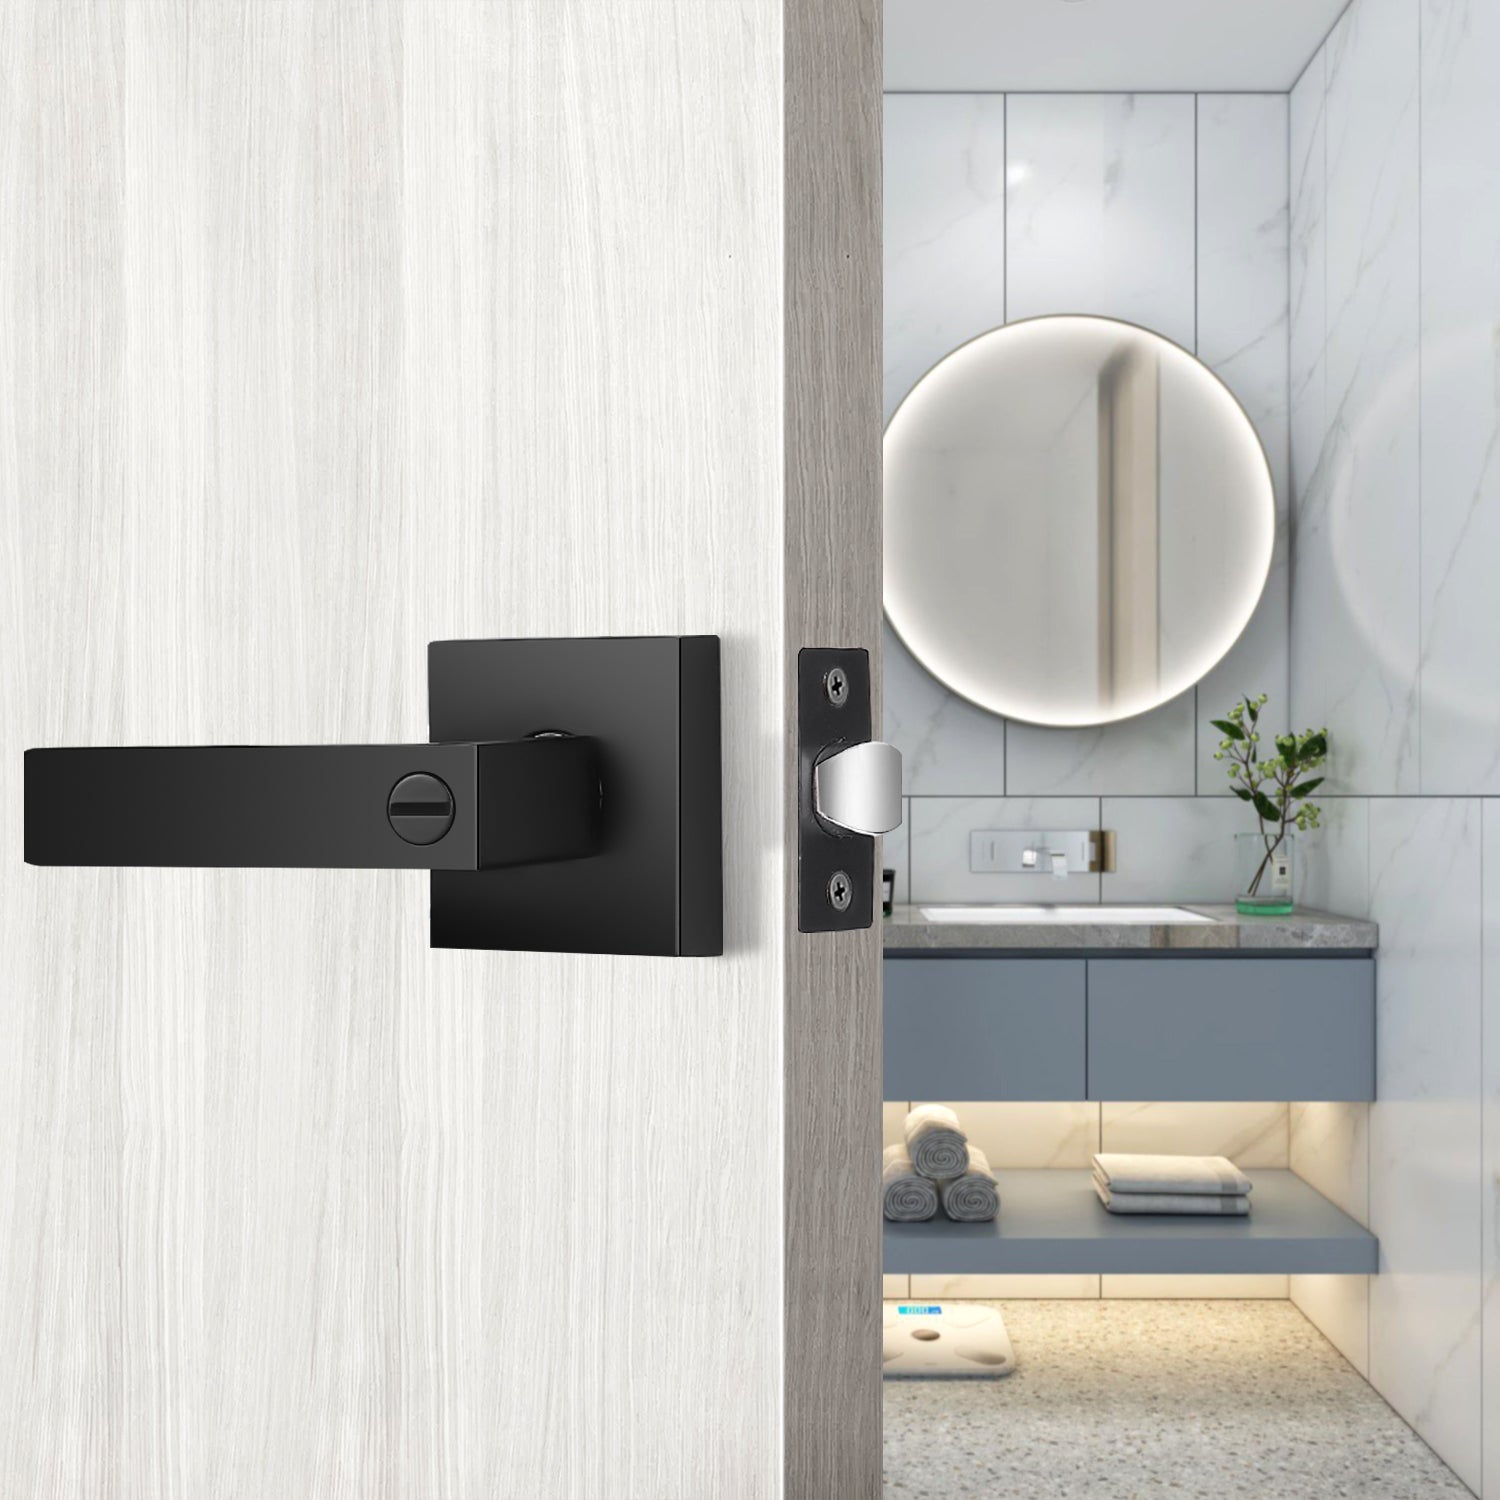 Probrico Heavy Duty Flat Black Square Privacy Lock Interior Door Levers Bedromm and Bathroom Door Handles Keyless Bed/Bath Lockset (10 Pack)